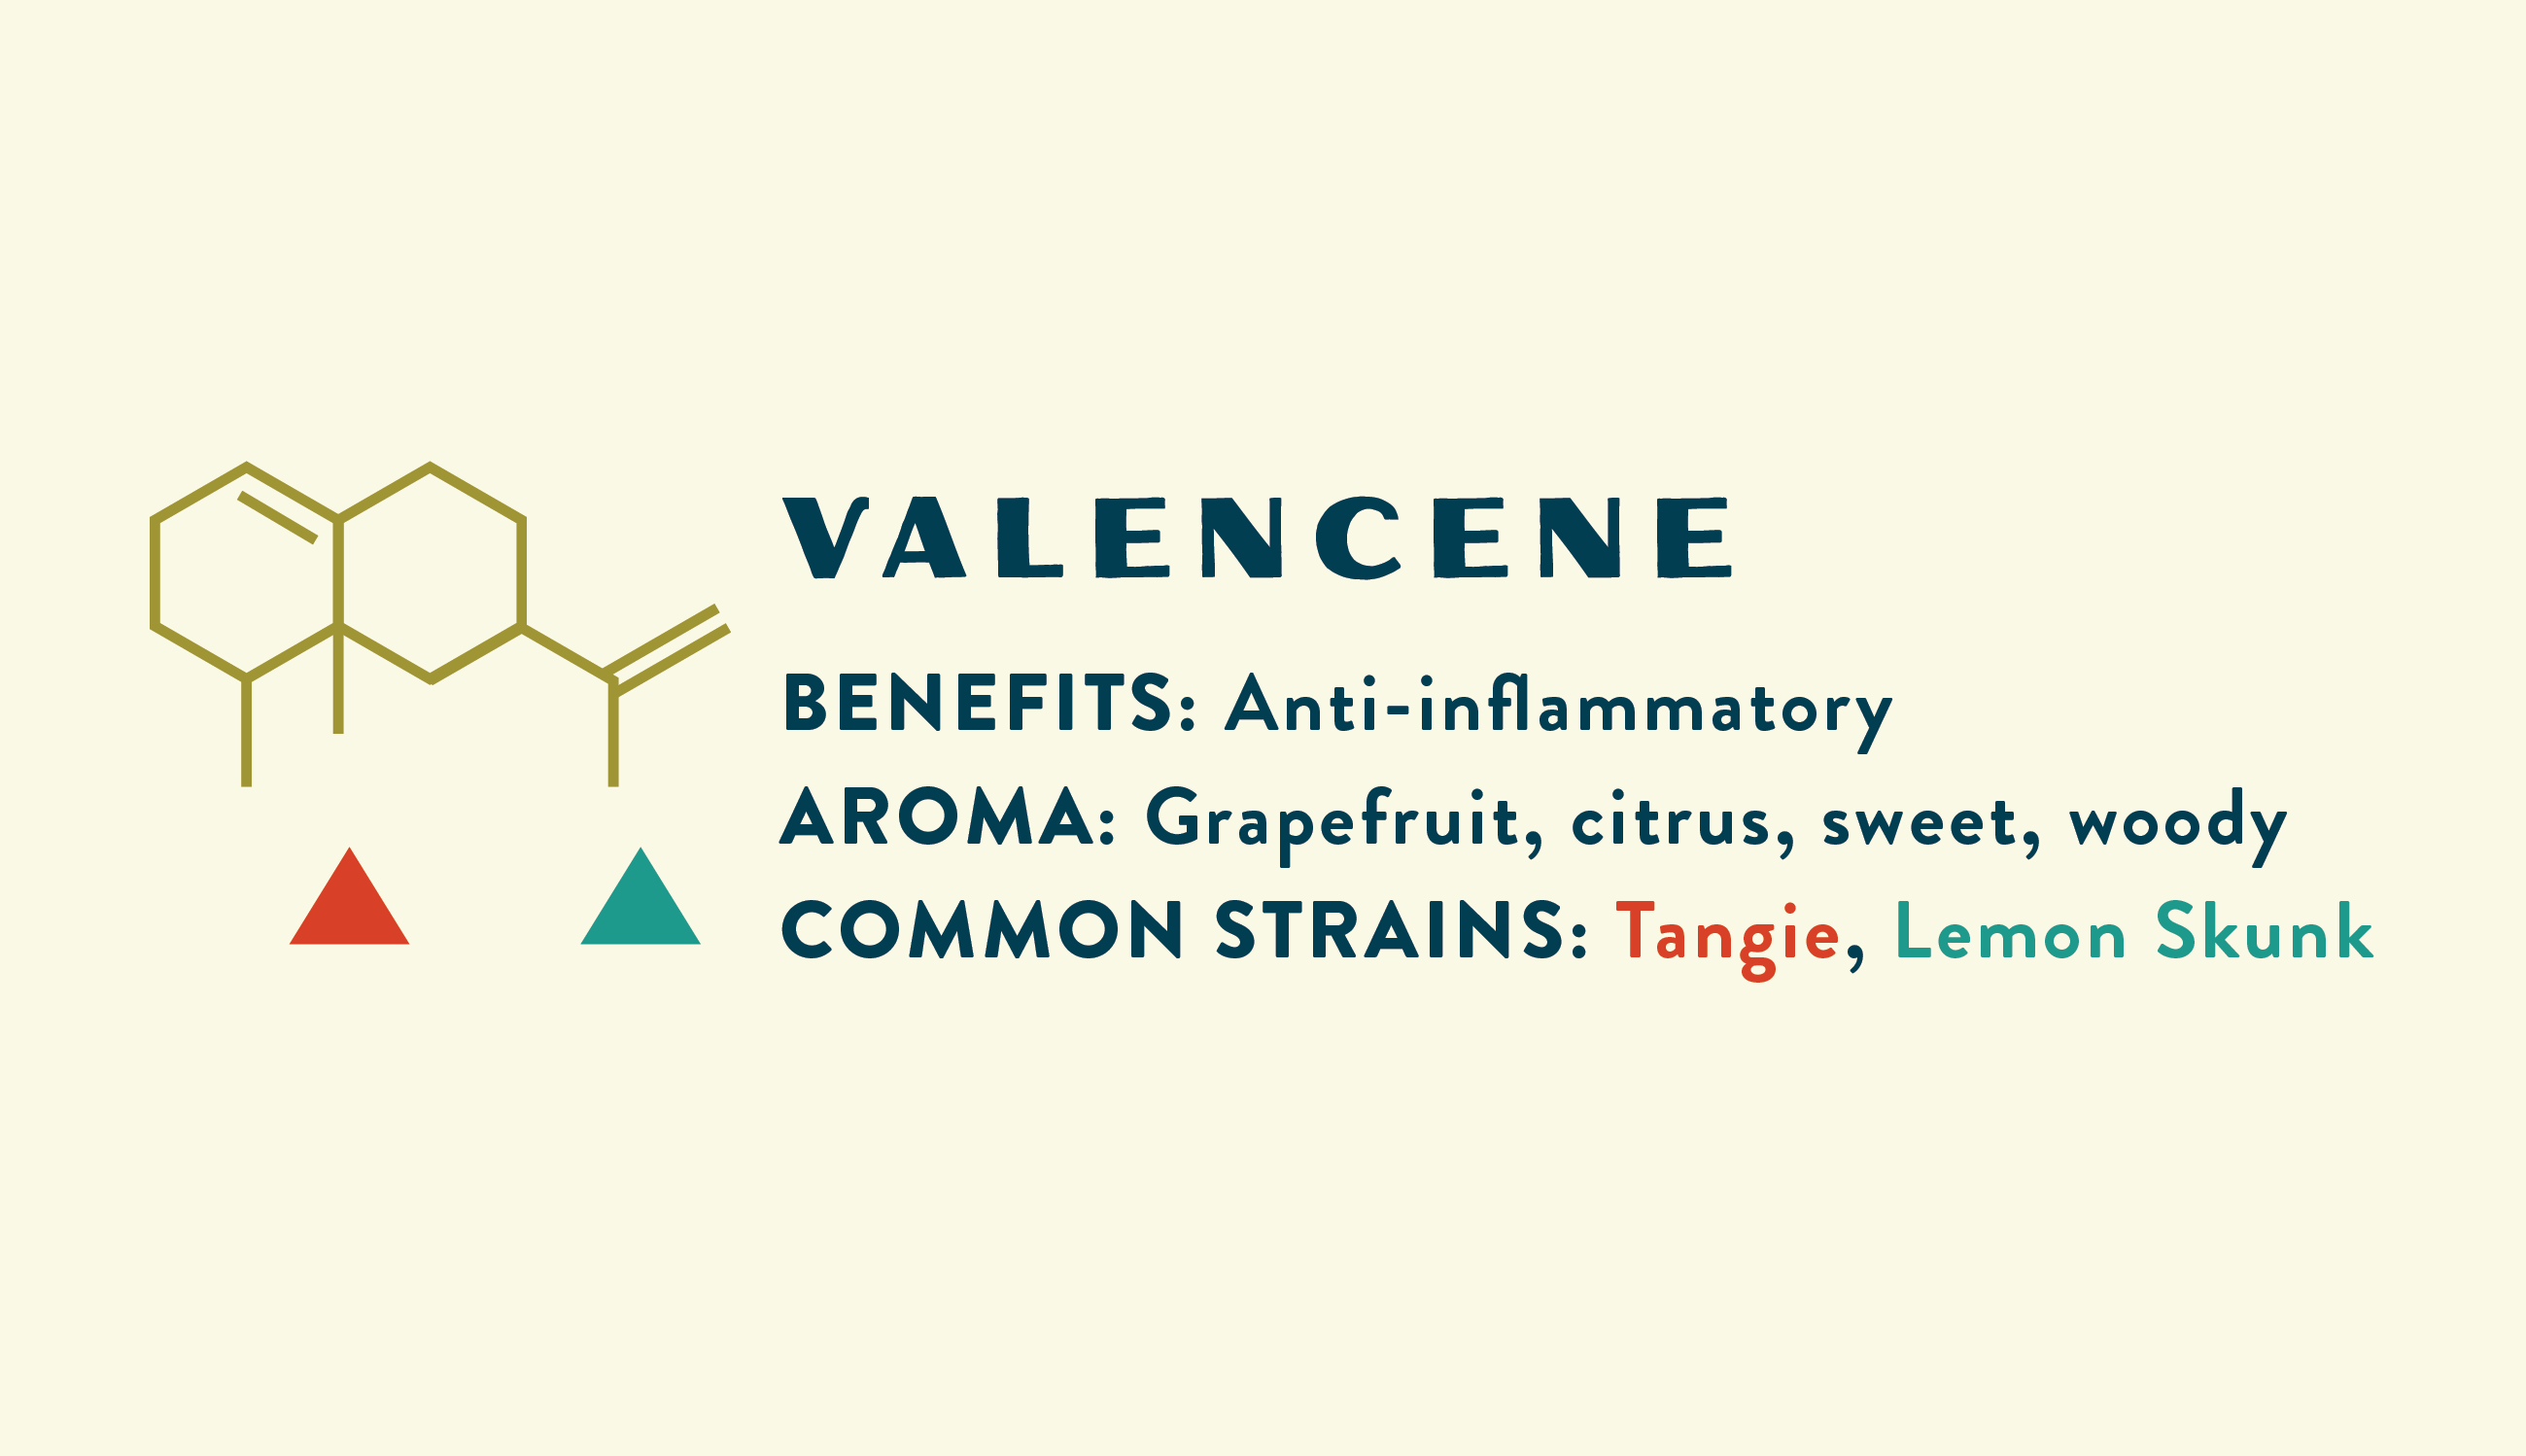 Valencene Information